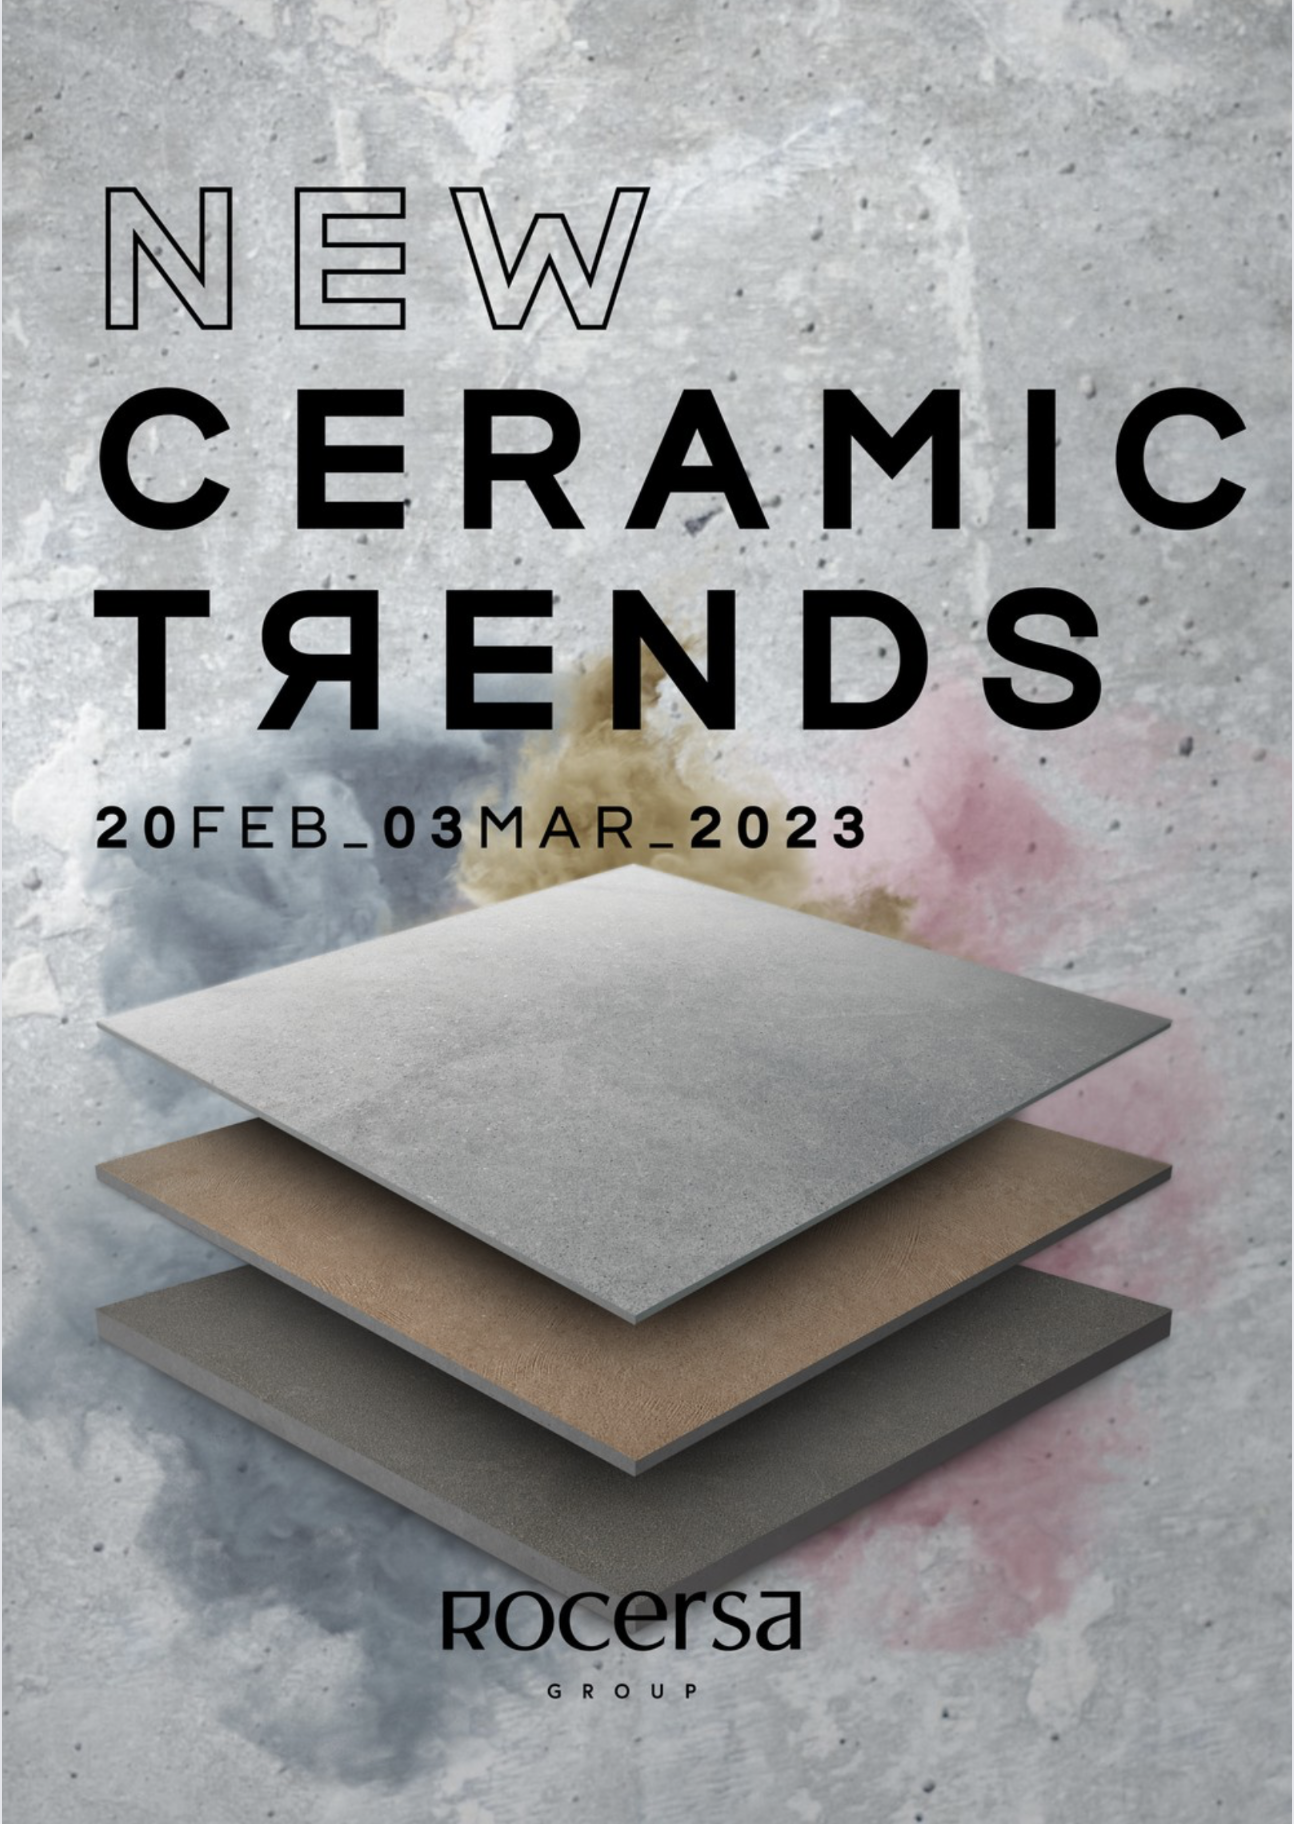 We invite you to New Ceramic Trends!